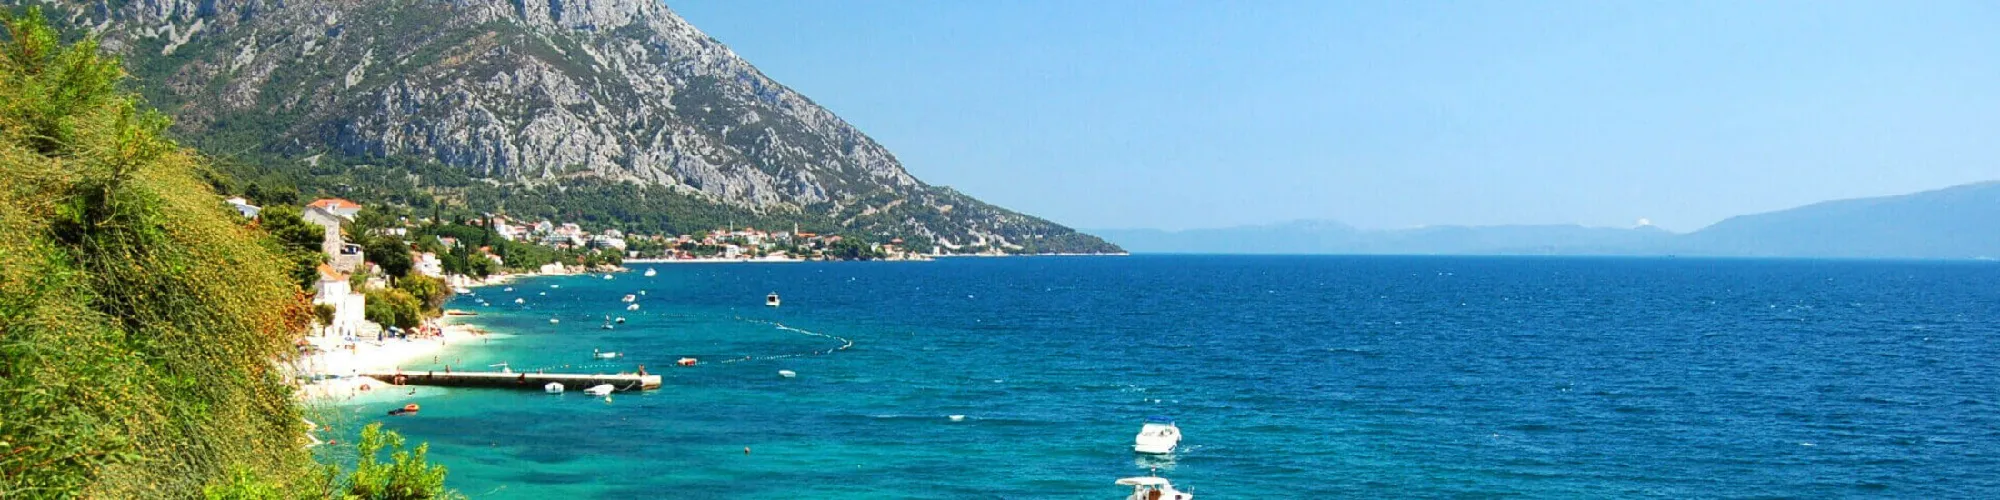 Urlaub in Kroatien background image